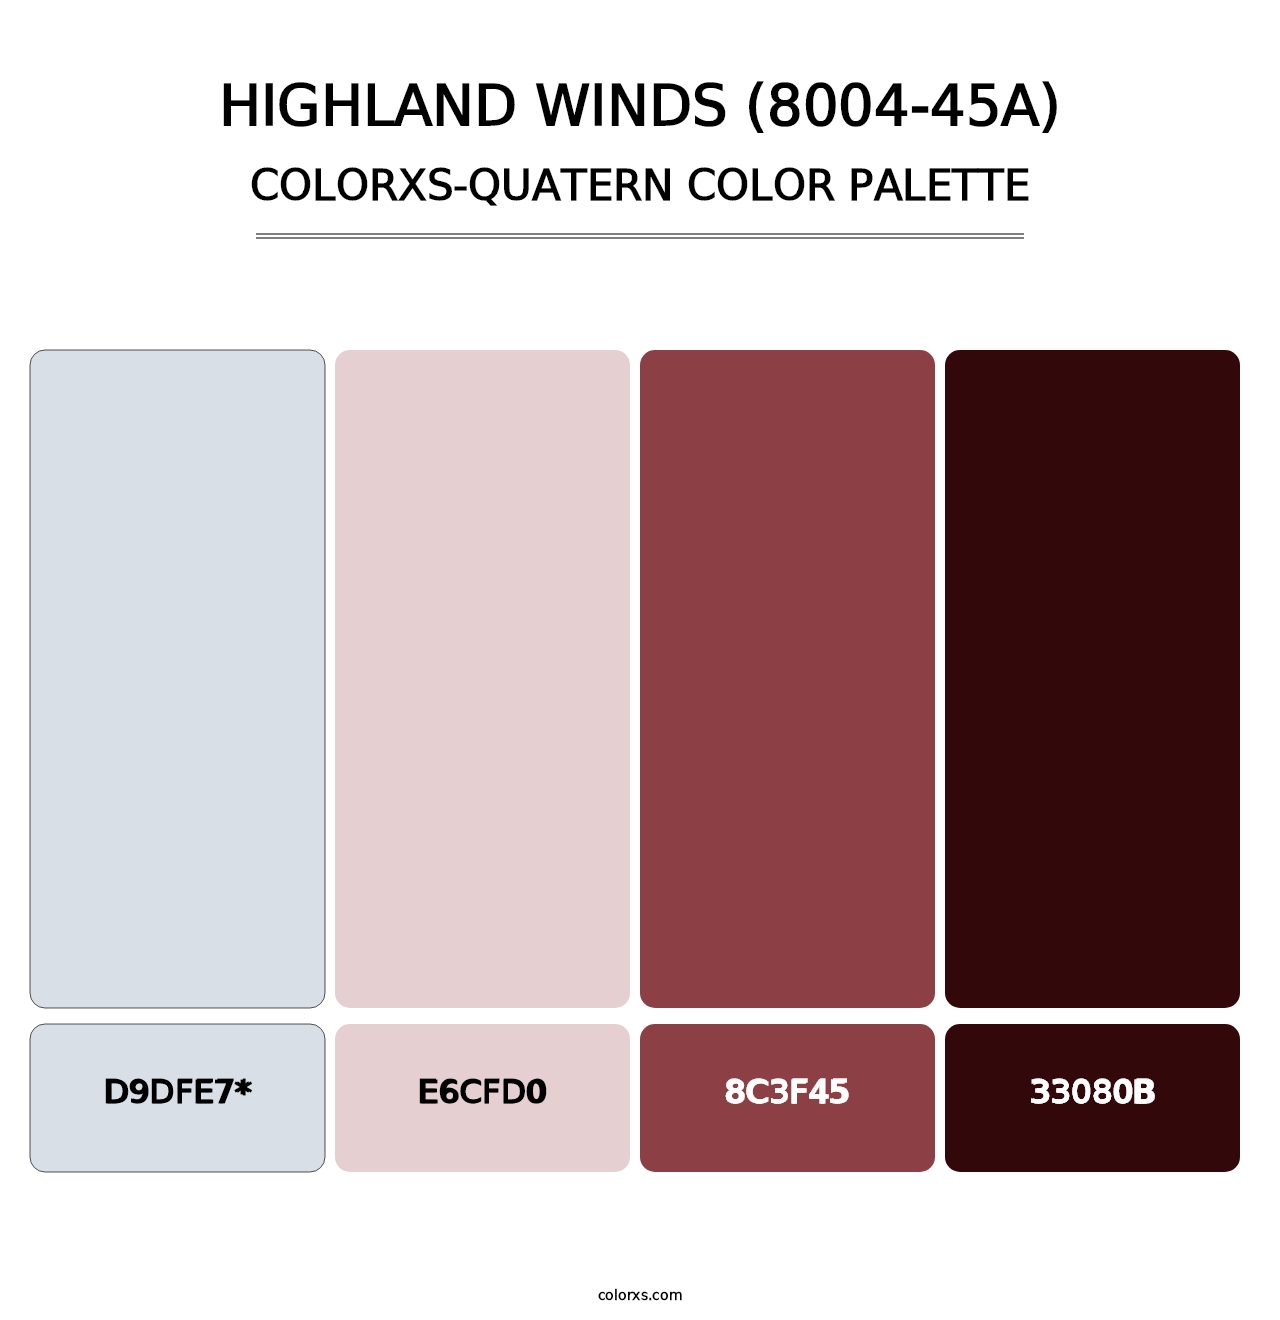 Highland Winds (8004-45A) - Colorxs Quatern Palette